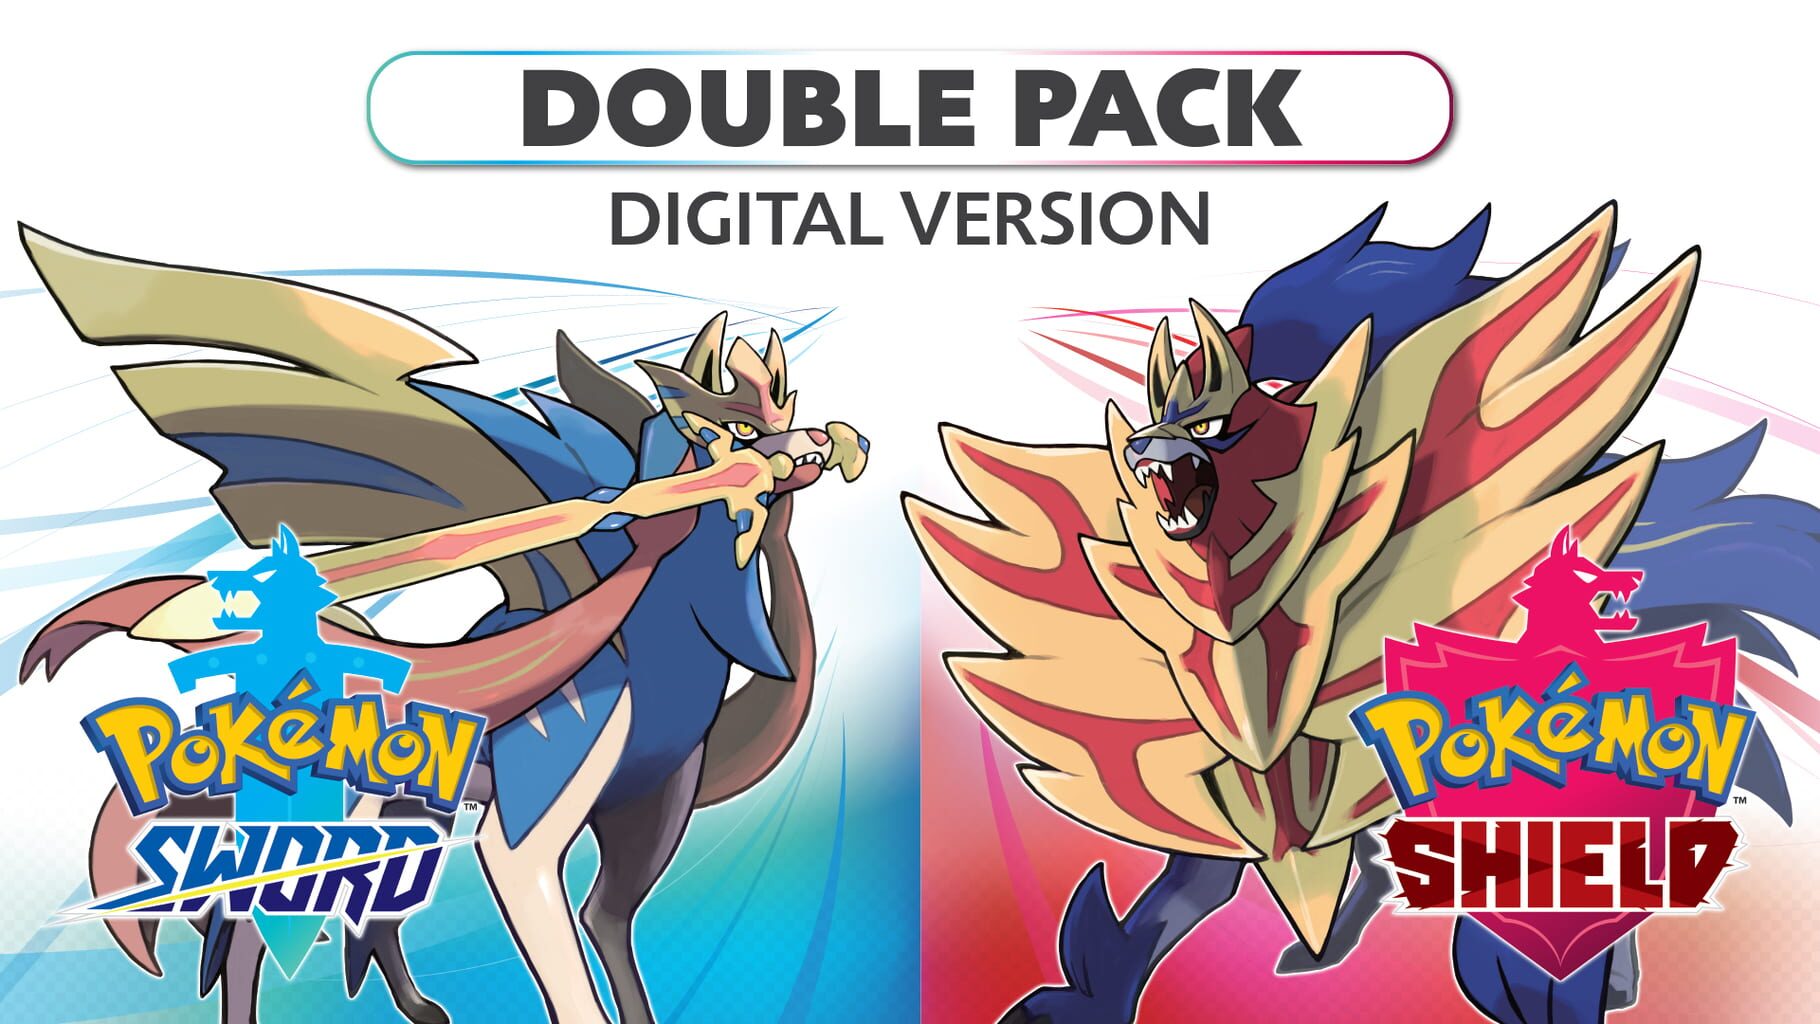 Pokémon Sword & Pokémon Shield Double Pack Image